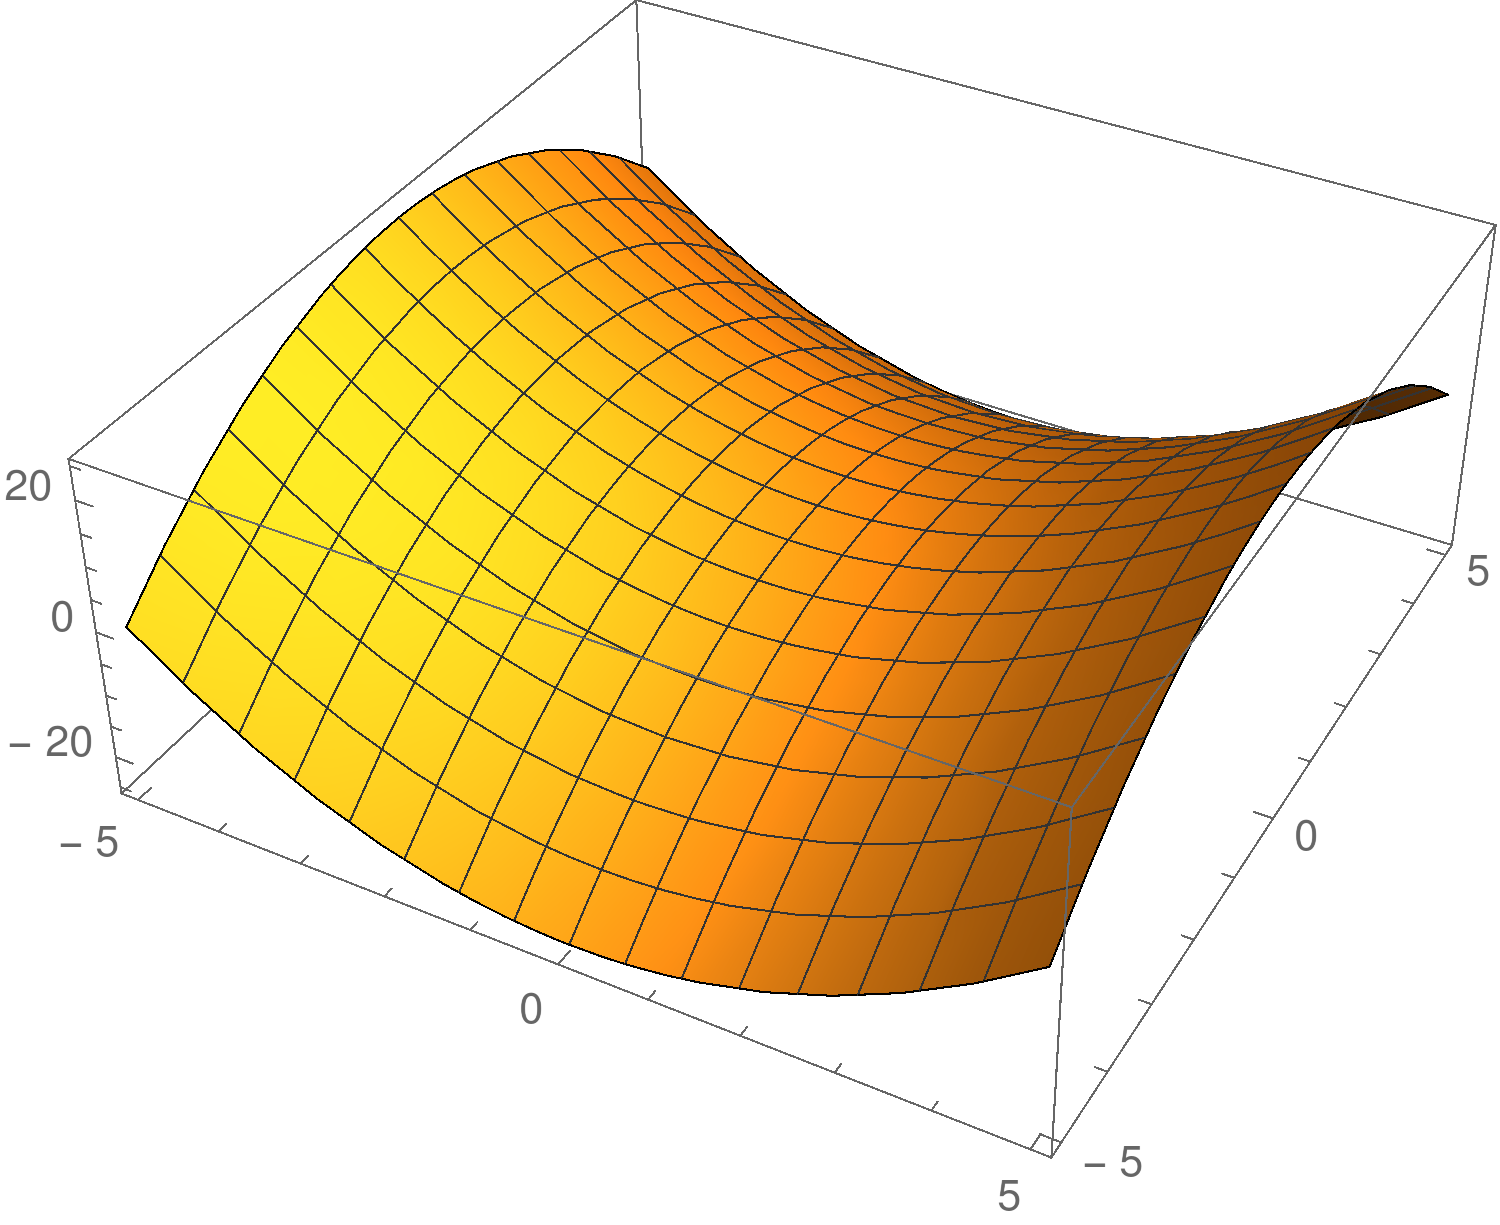 Esimerkki 4 (satulapinta) Funktion kuvaaja z = f (x, y), kun f (x,